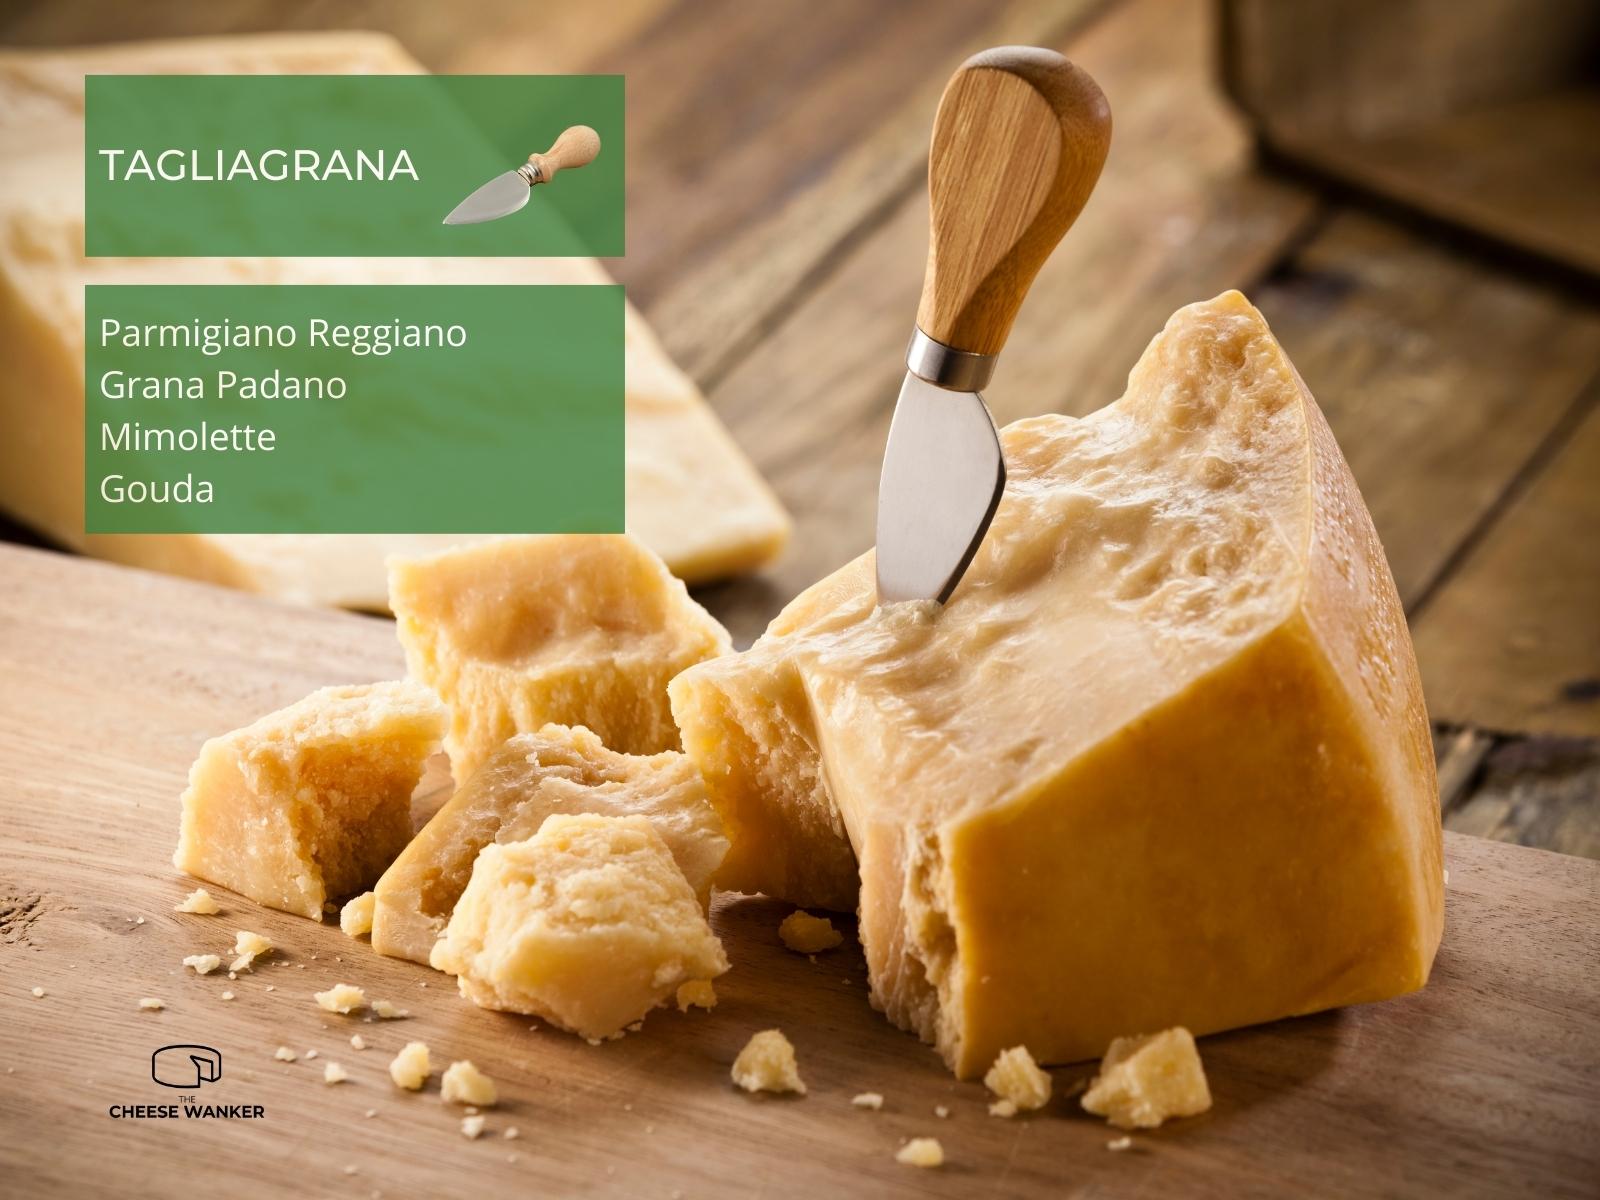 Cutting Parmigiano Reggiano with Tagliagrana knife